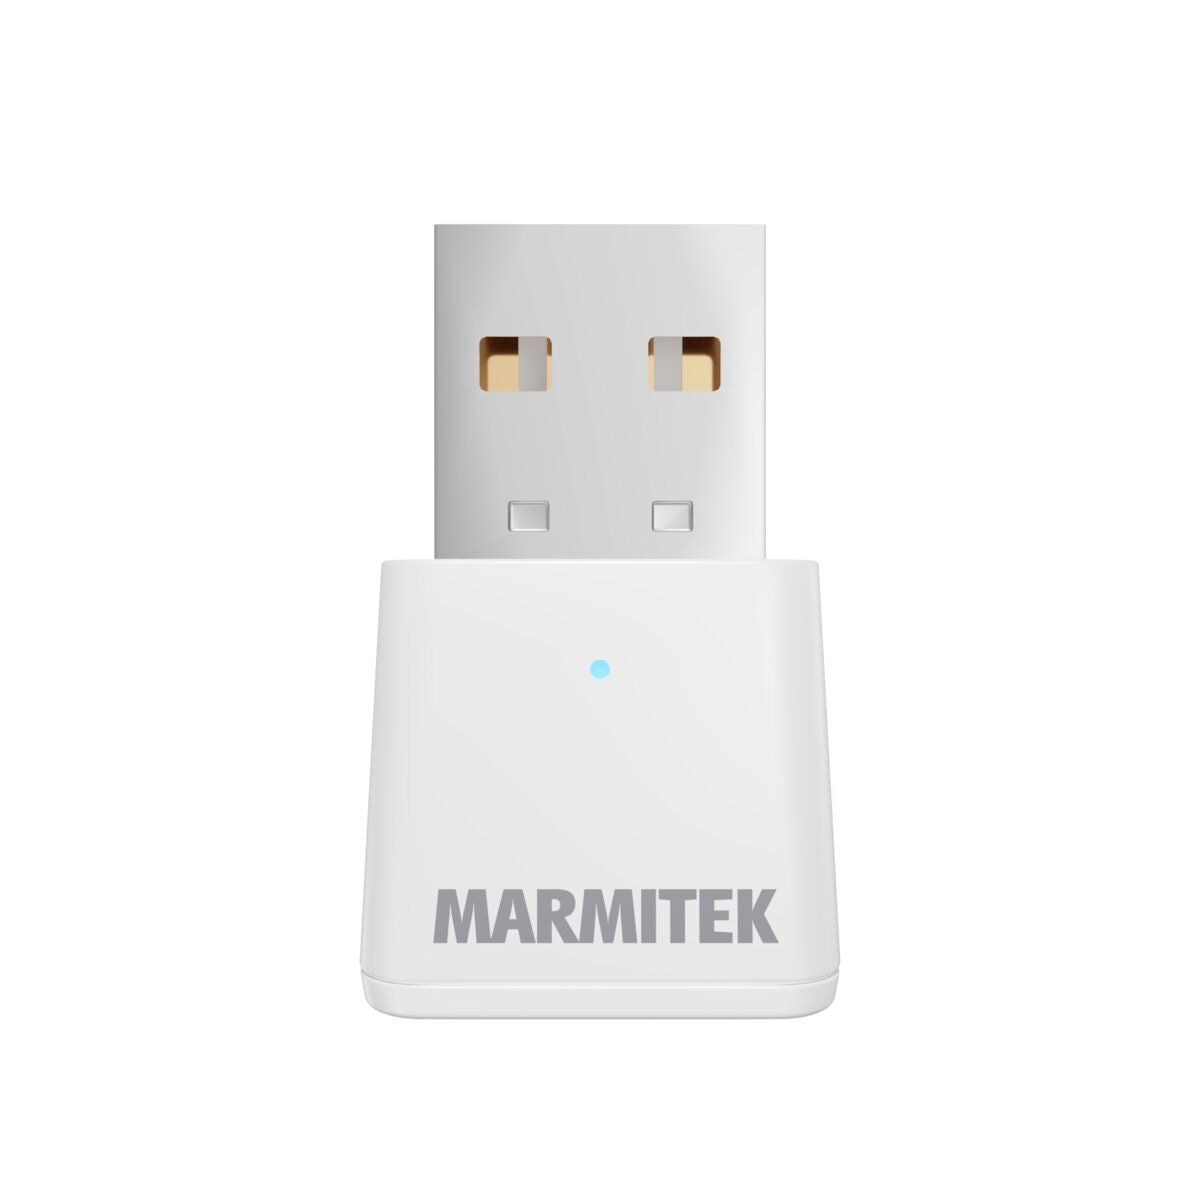 Link SE - Zigbee repeater - Product Image | Marmitek